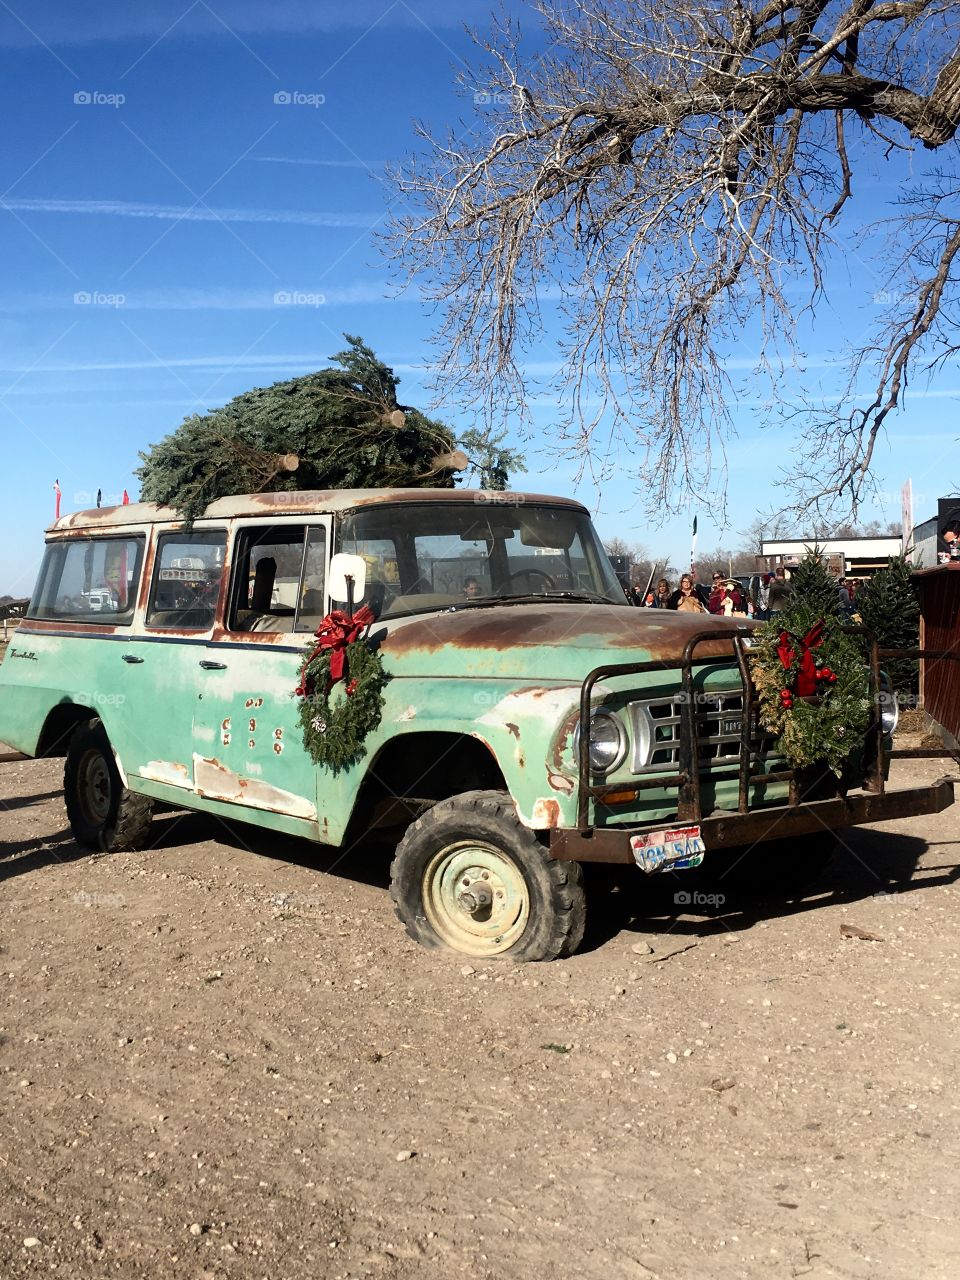 Green vintage station wagon with Christmas tree on top.